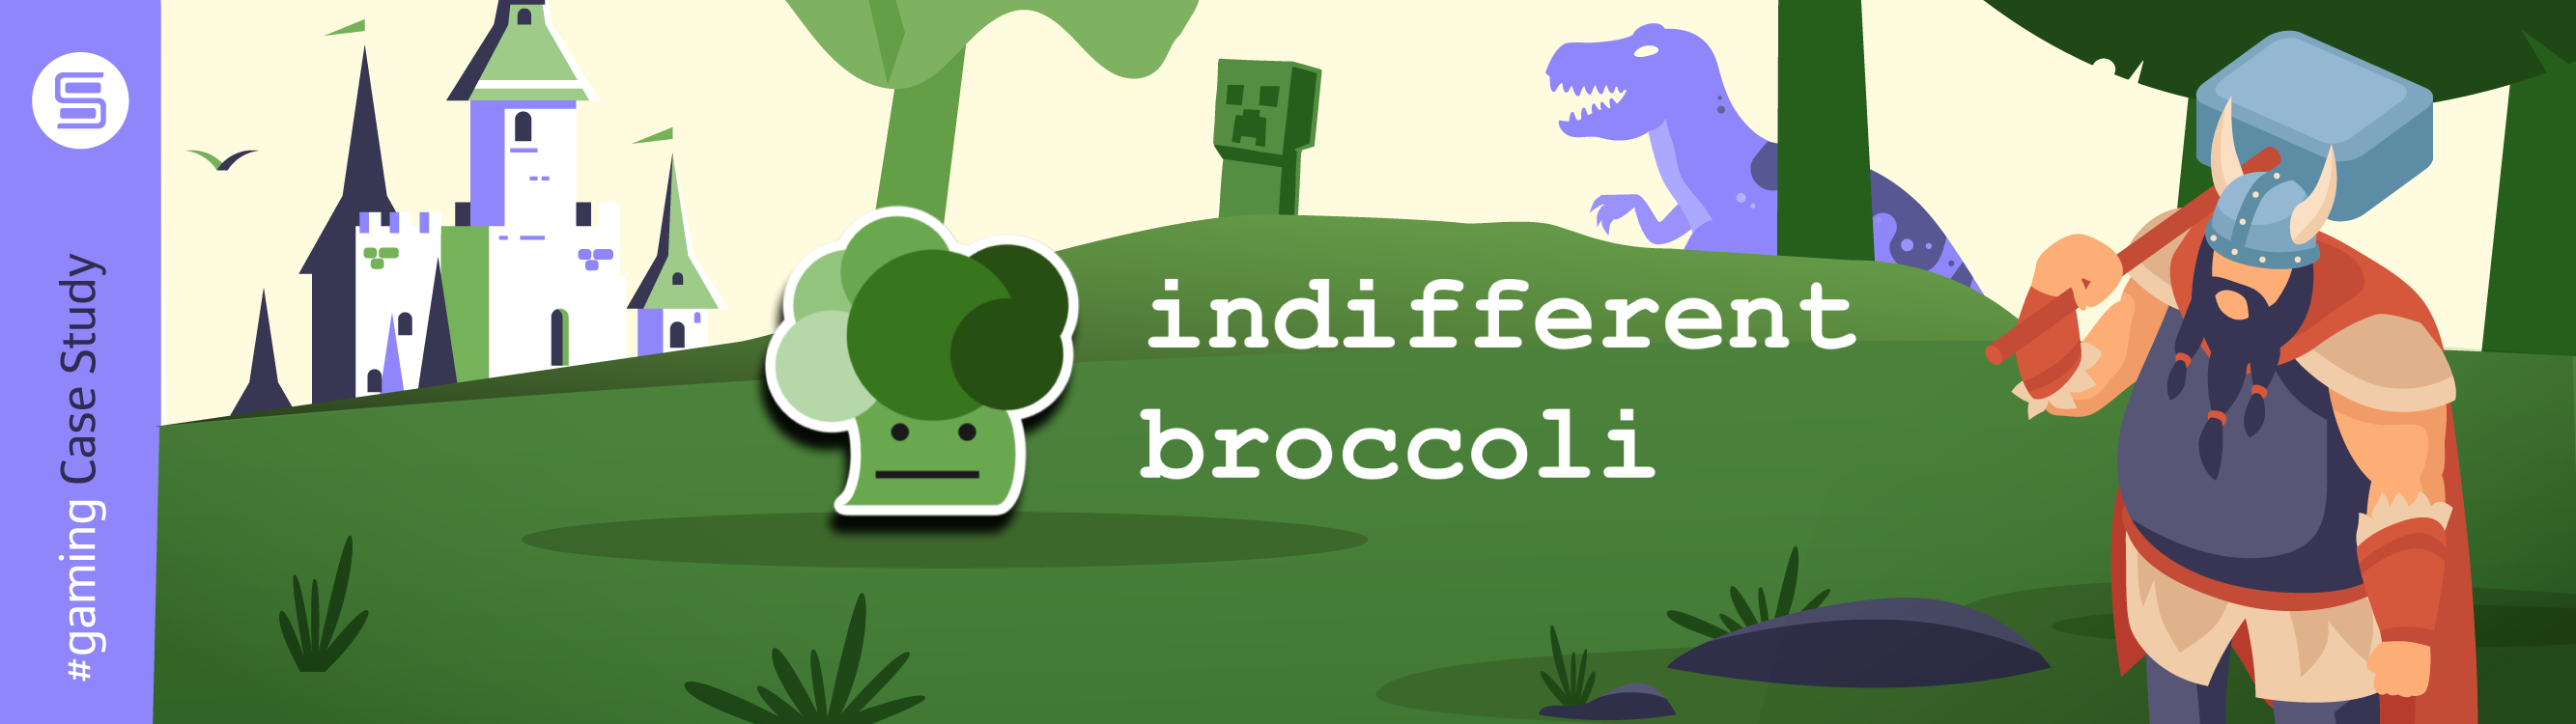 Indifferent Broccoli